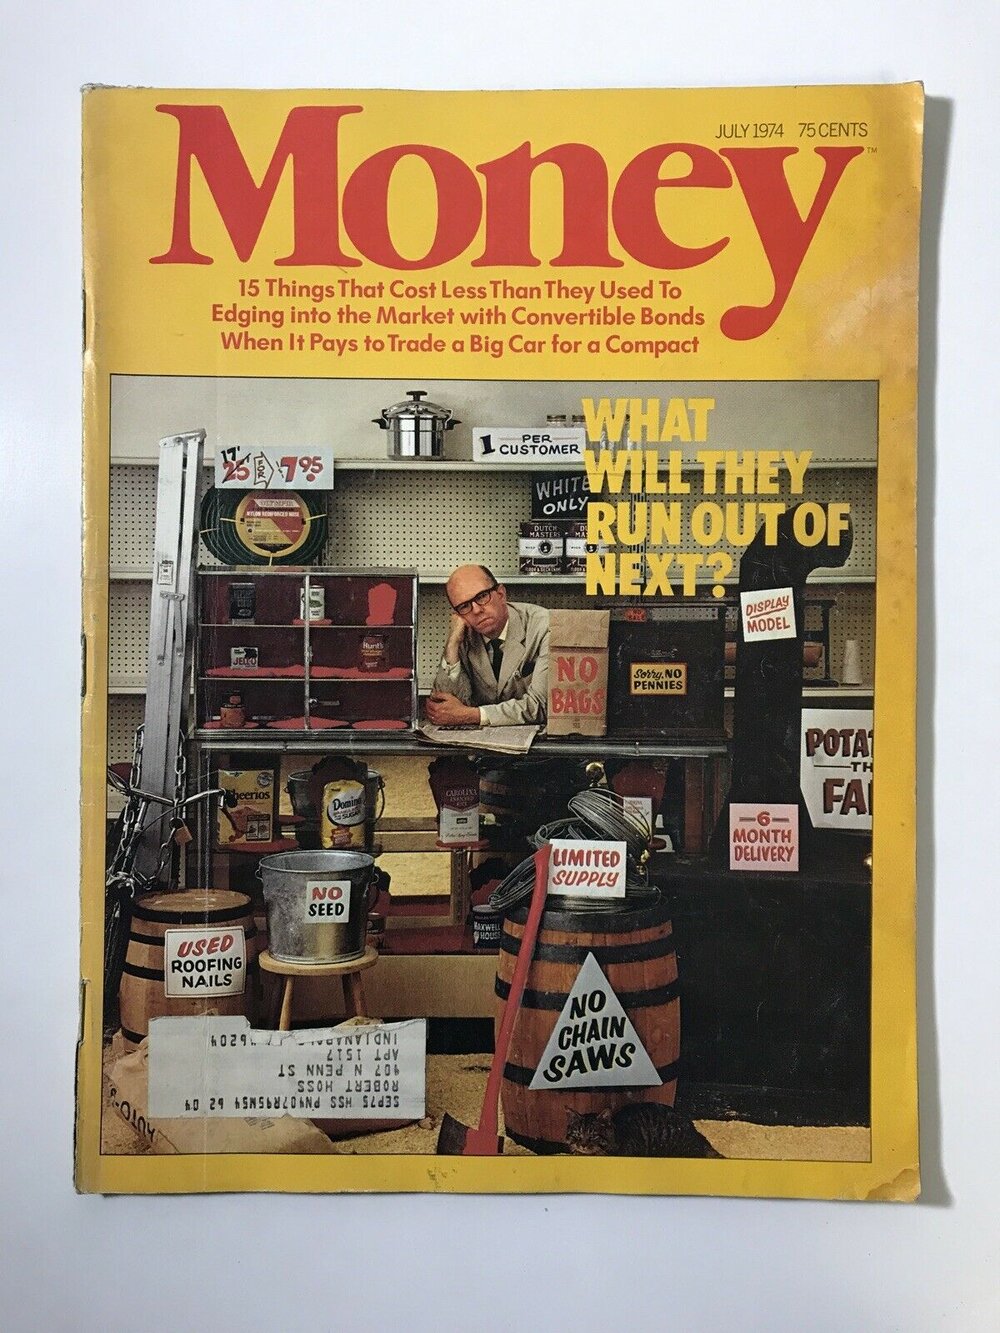 Fullerton_Money Magazine_Run Out.jpeg